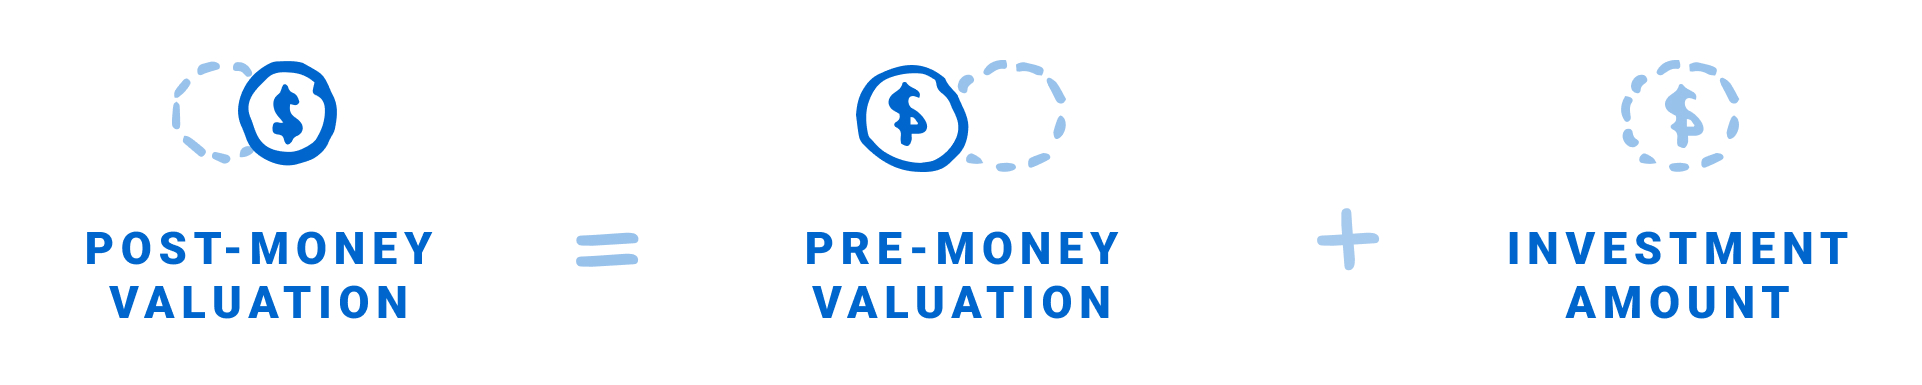 Post-money valuation = pre-money valuation + investment amount